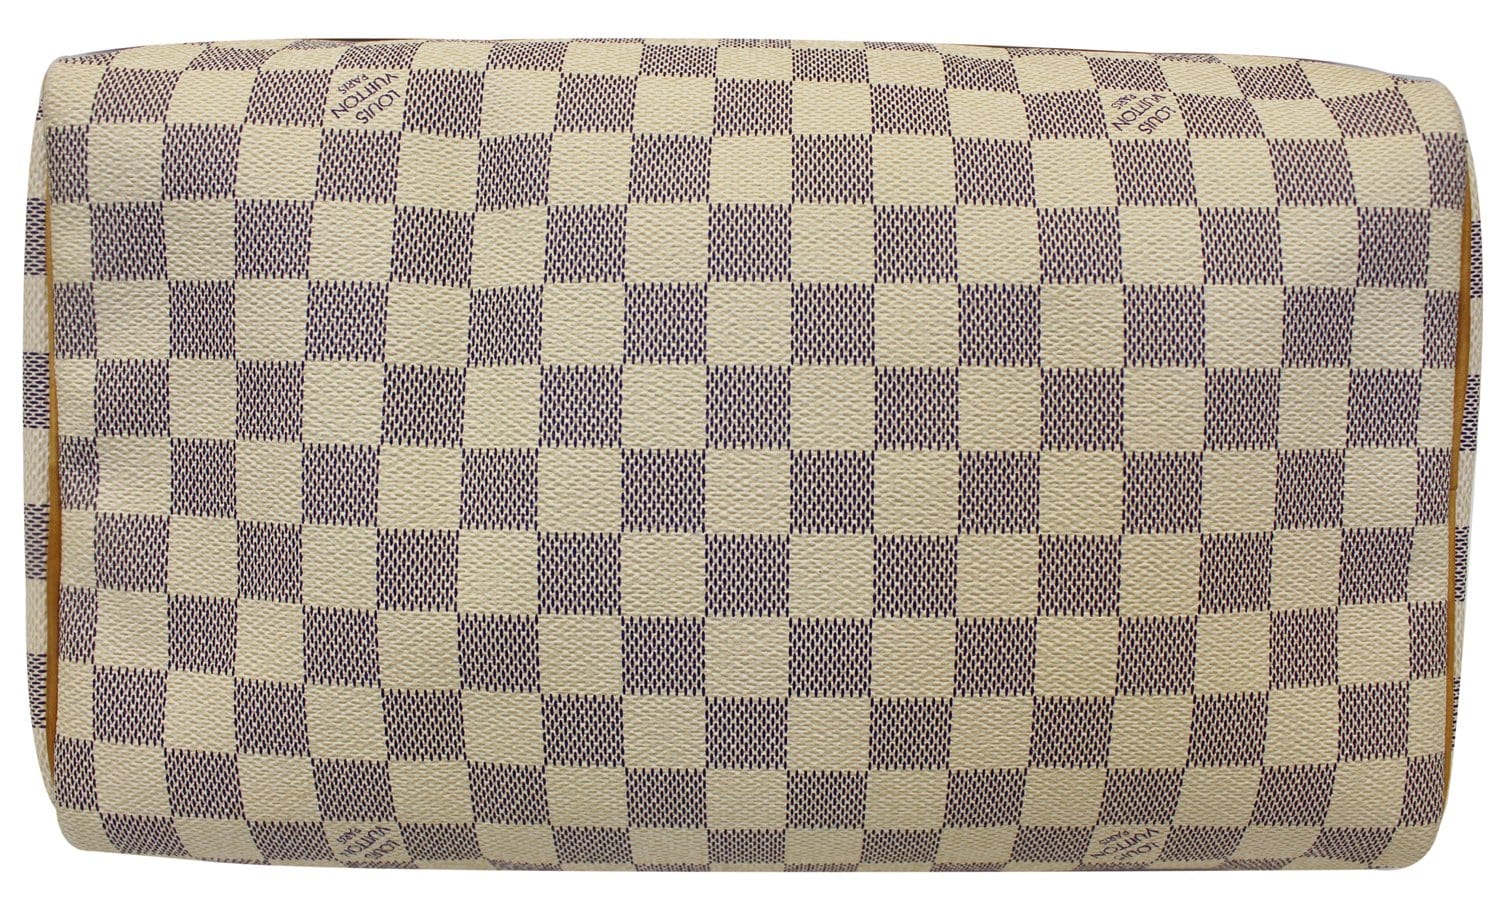 Speedy Bandoulière 30 Damier Azur Canvas - Women - Handbags